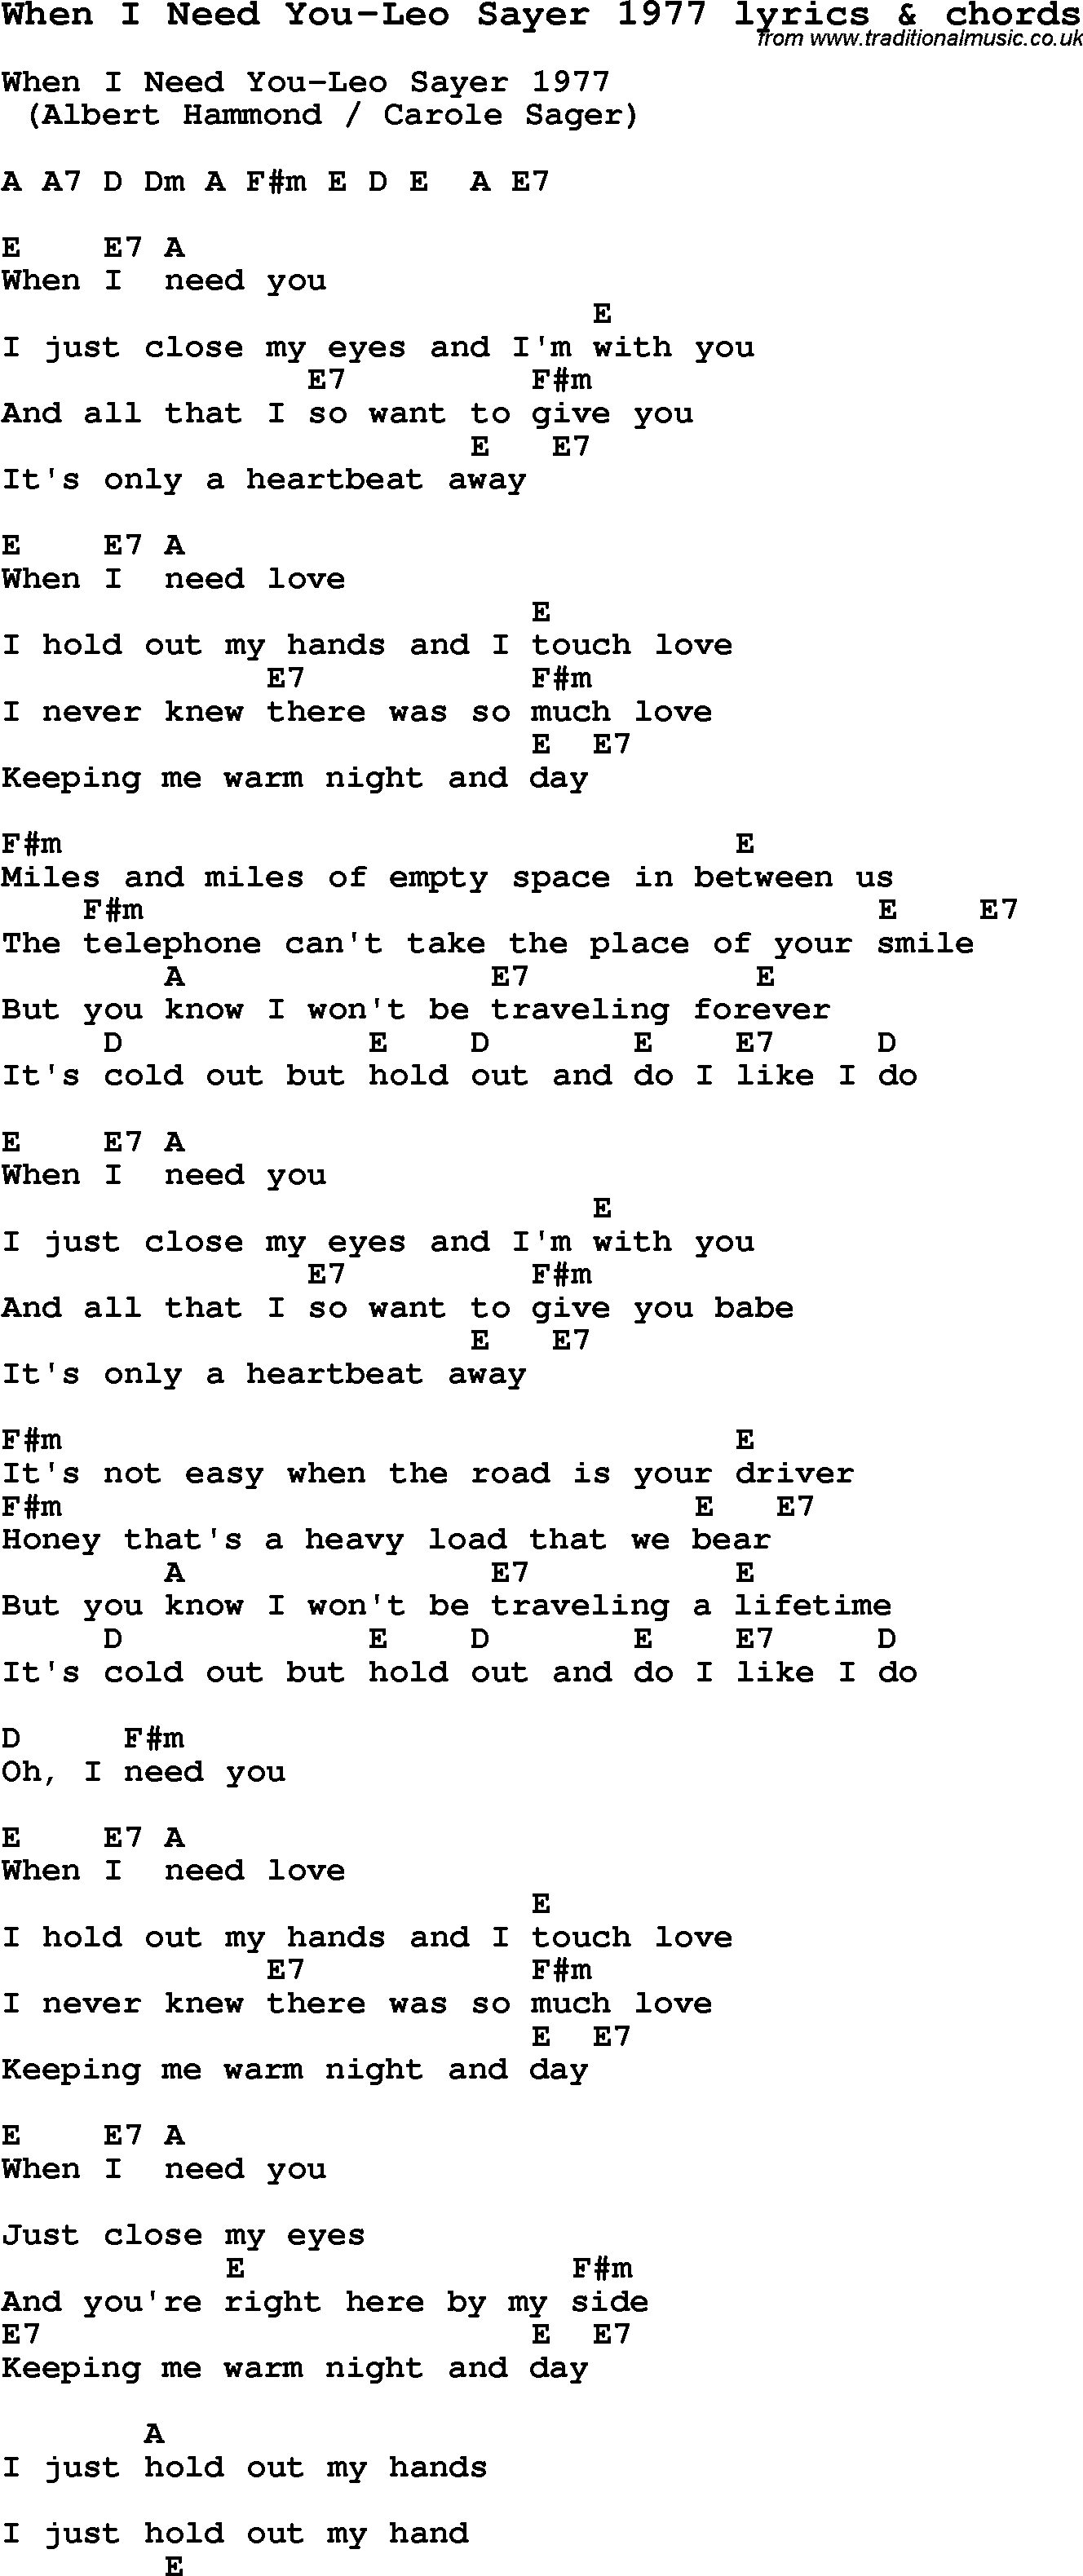 Love Song Lyrics for: When I Need You-Leo Sayer 1977 with chords for Ukulele, Guitar Banjo etc.